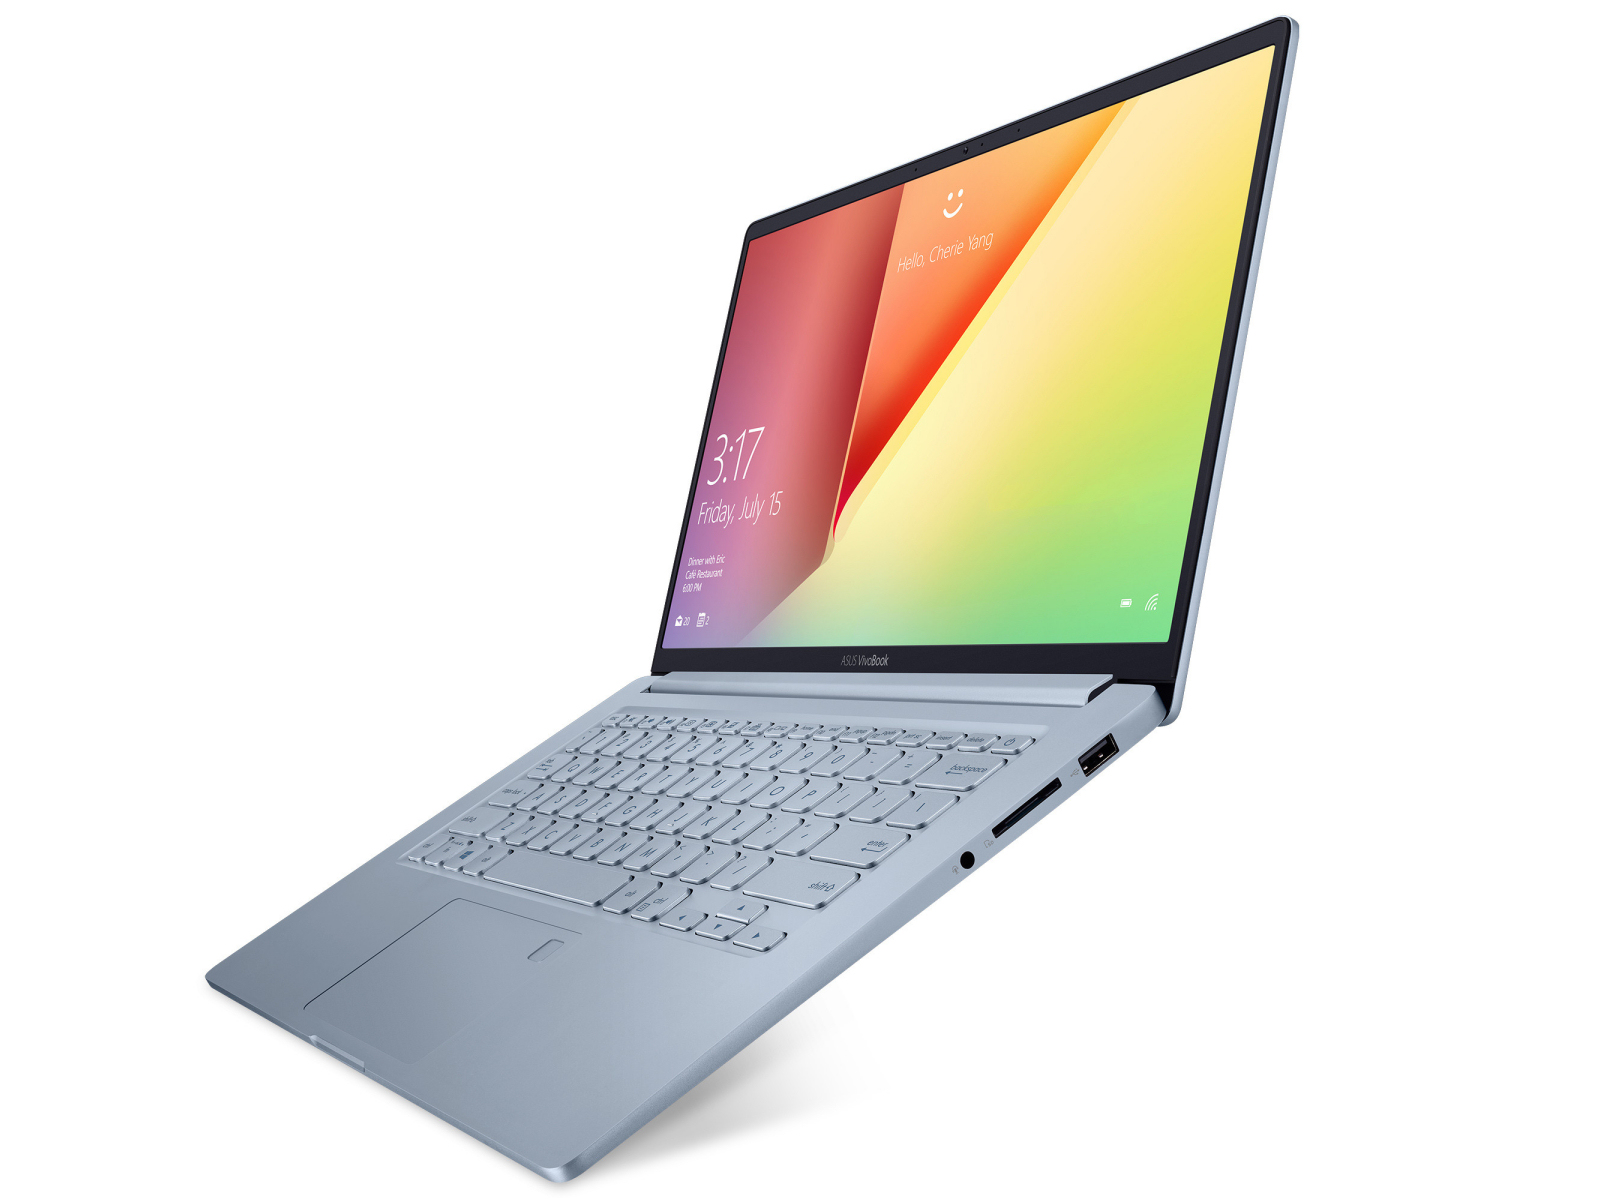 Asus VivoBook 14 X403FA -  External Reviews